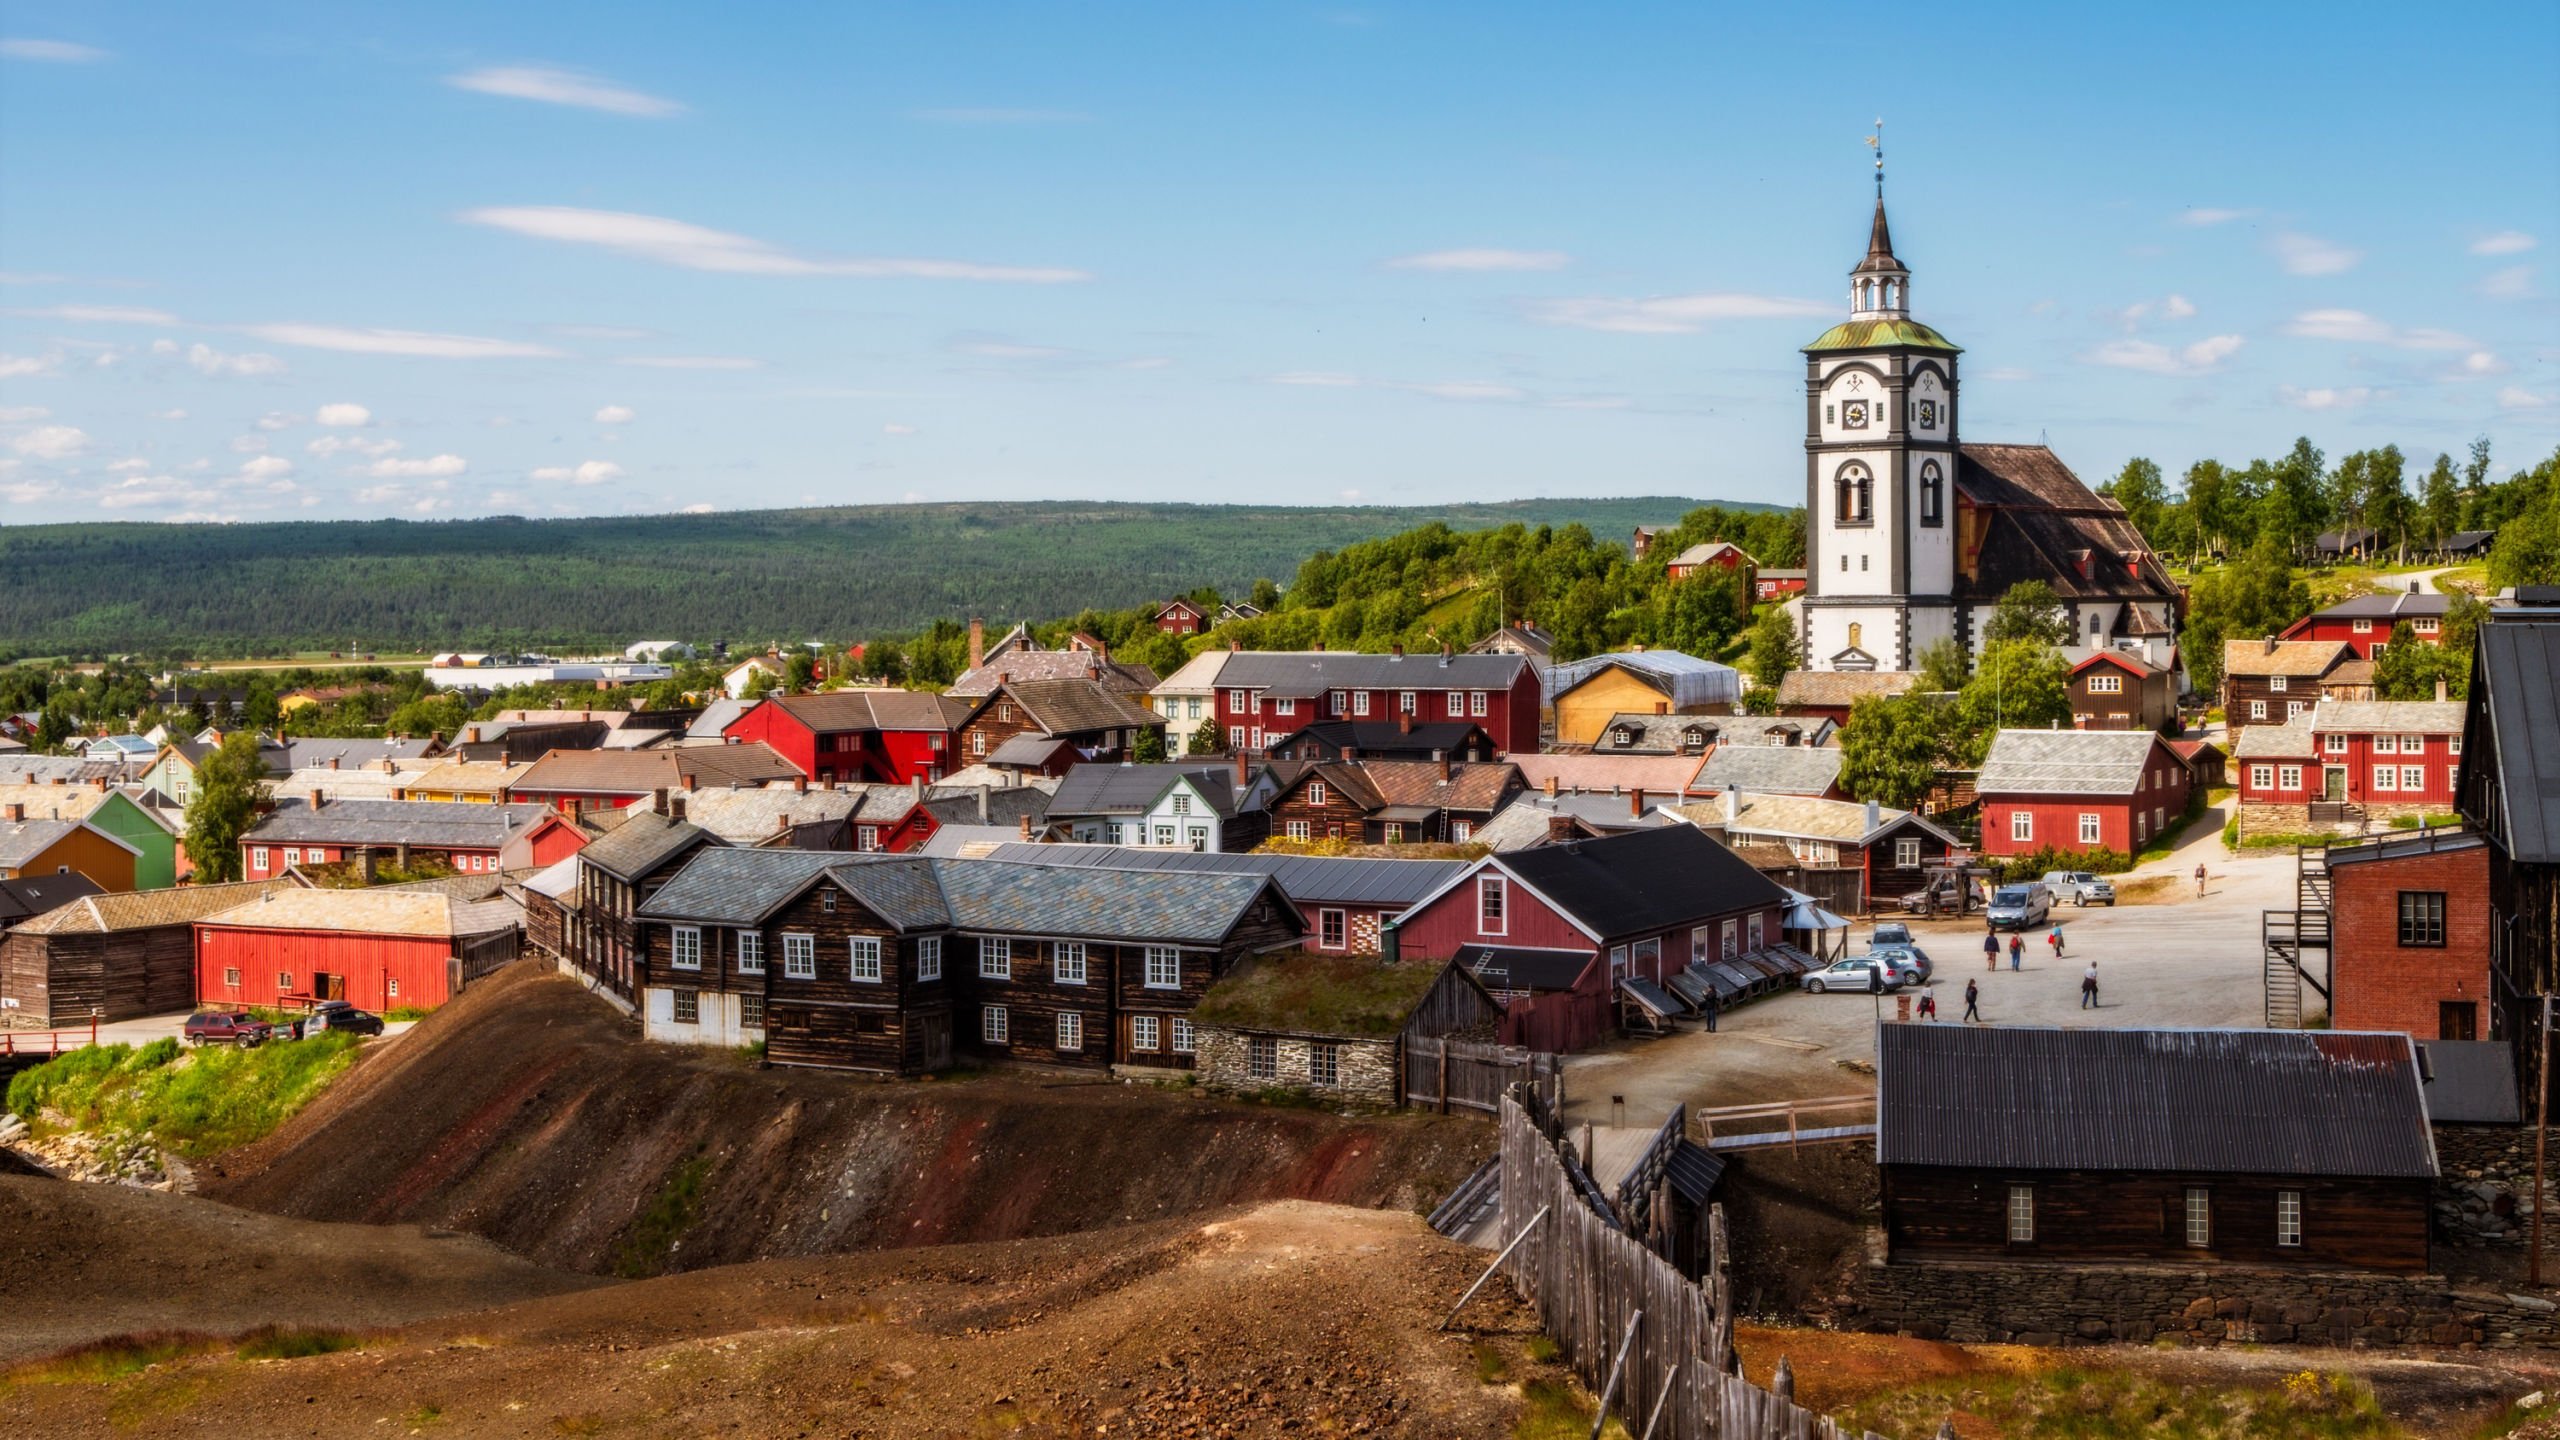 Røros copper mining town in Norway.